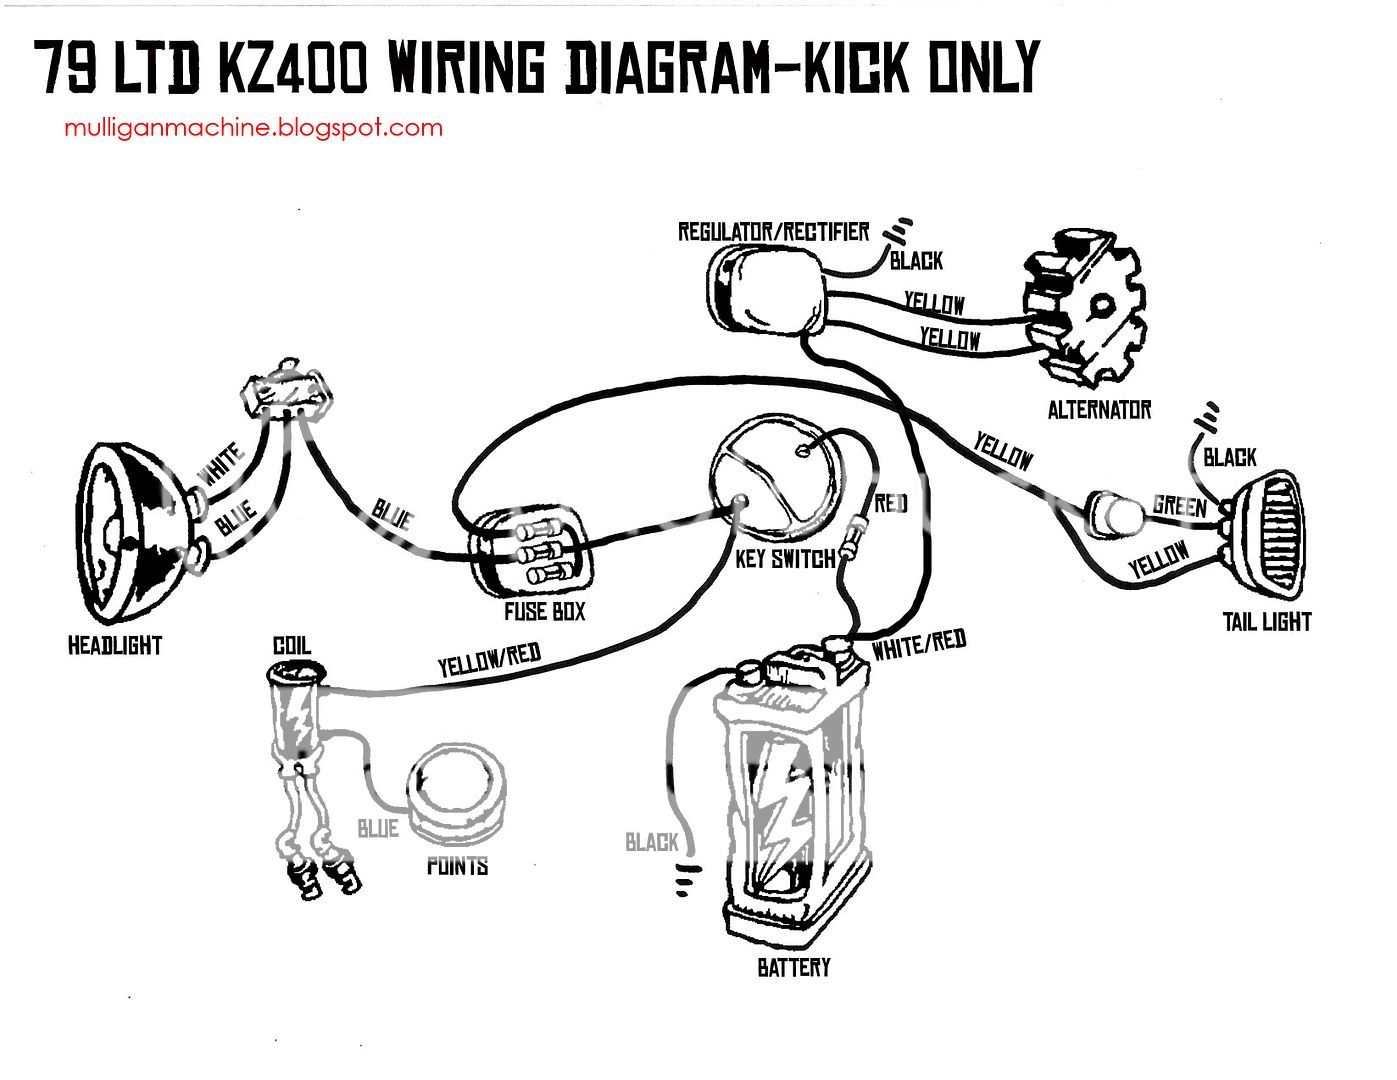 79-ltd-kz400-wiring-kick-only.jpg